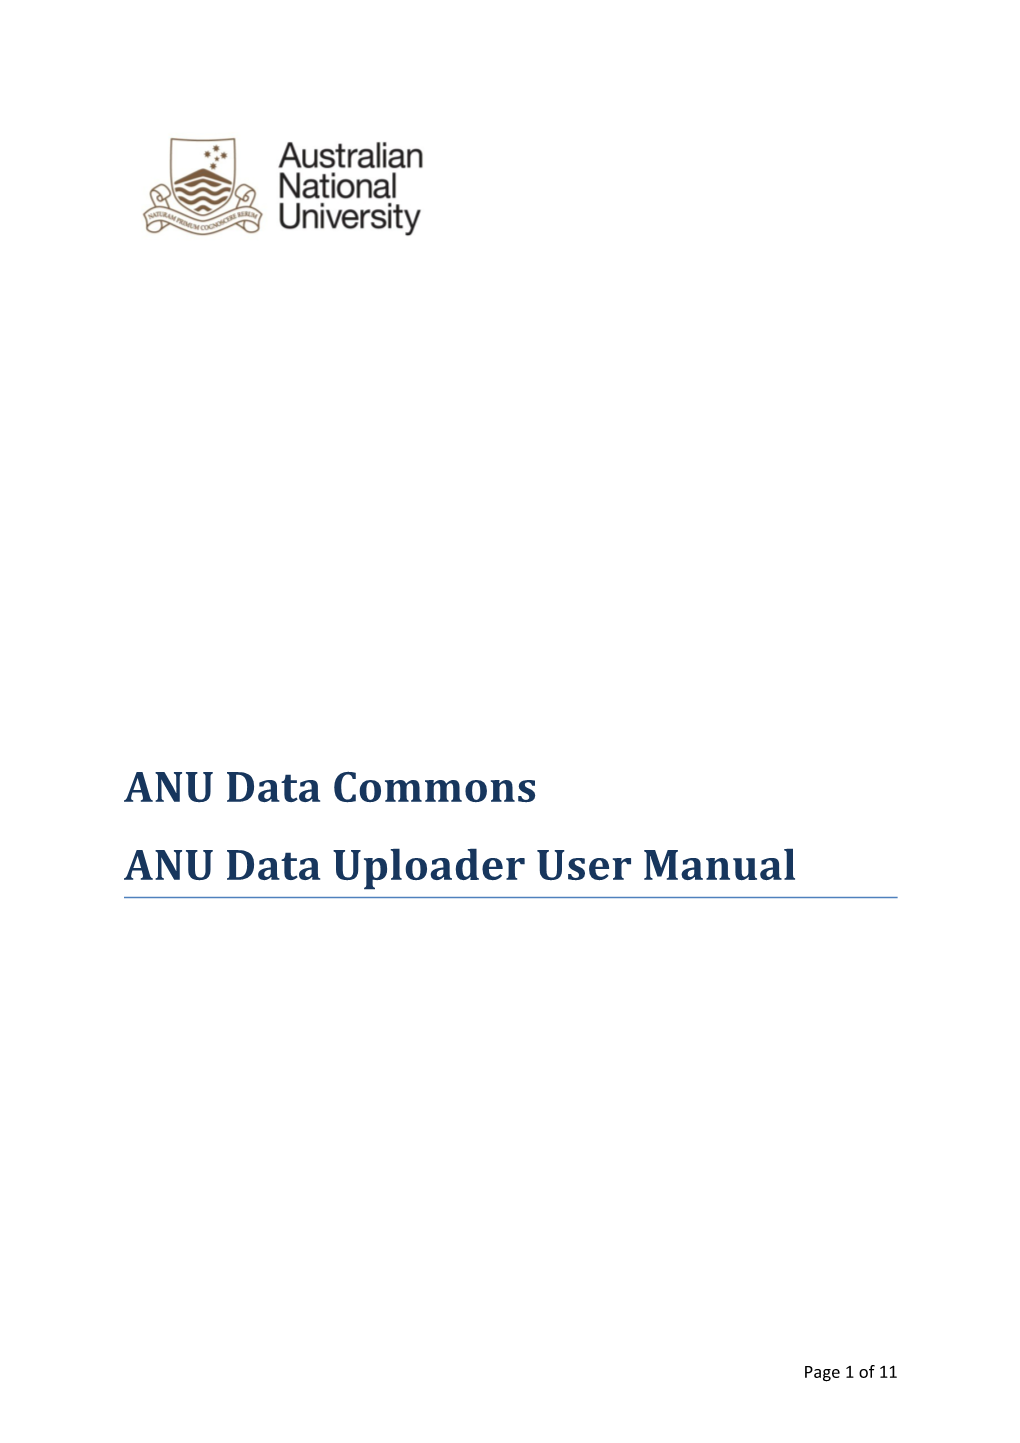 ANU Data Uploader User Manual